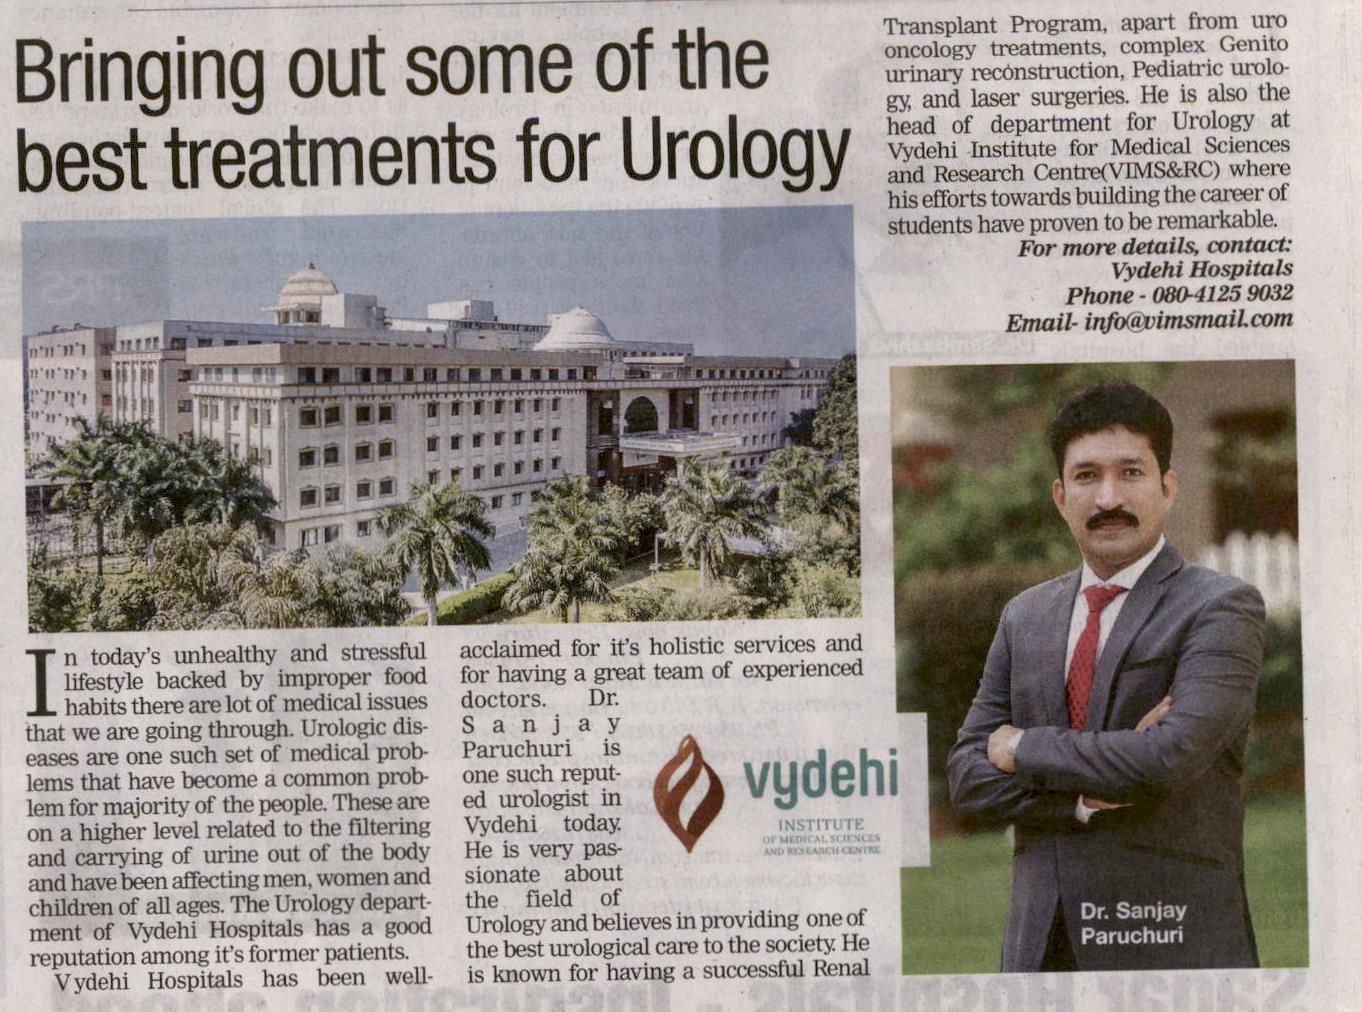 Times Health Award - Best Treatments for Urology- Dr. Sanjay Panchuri